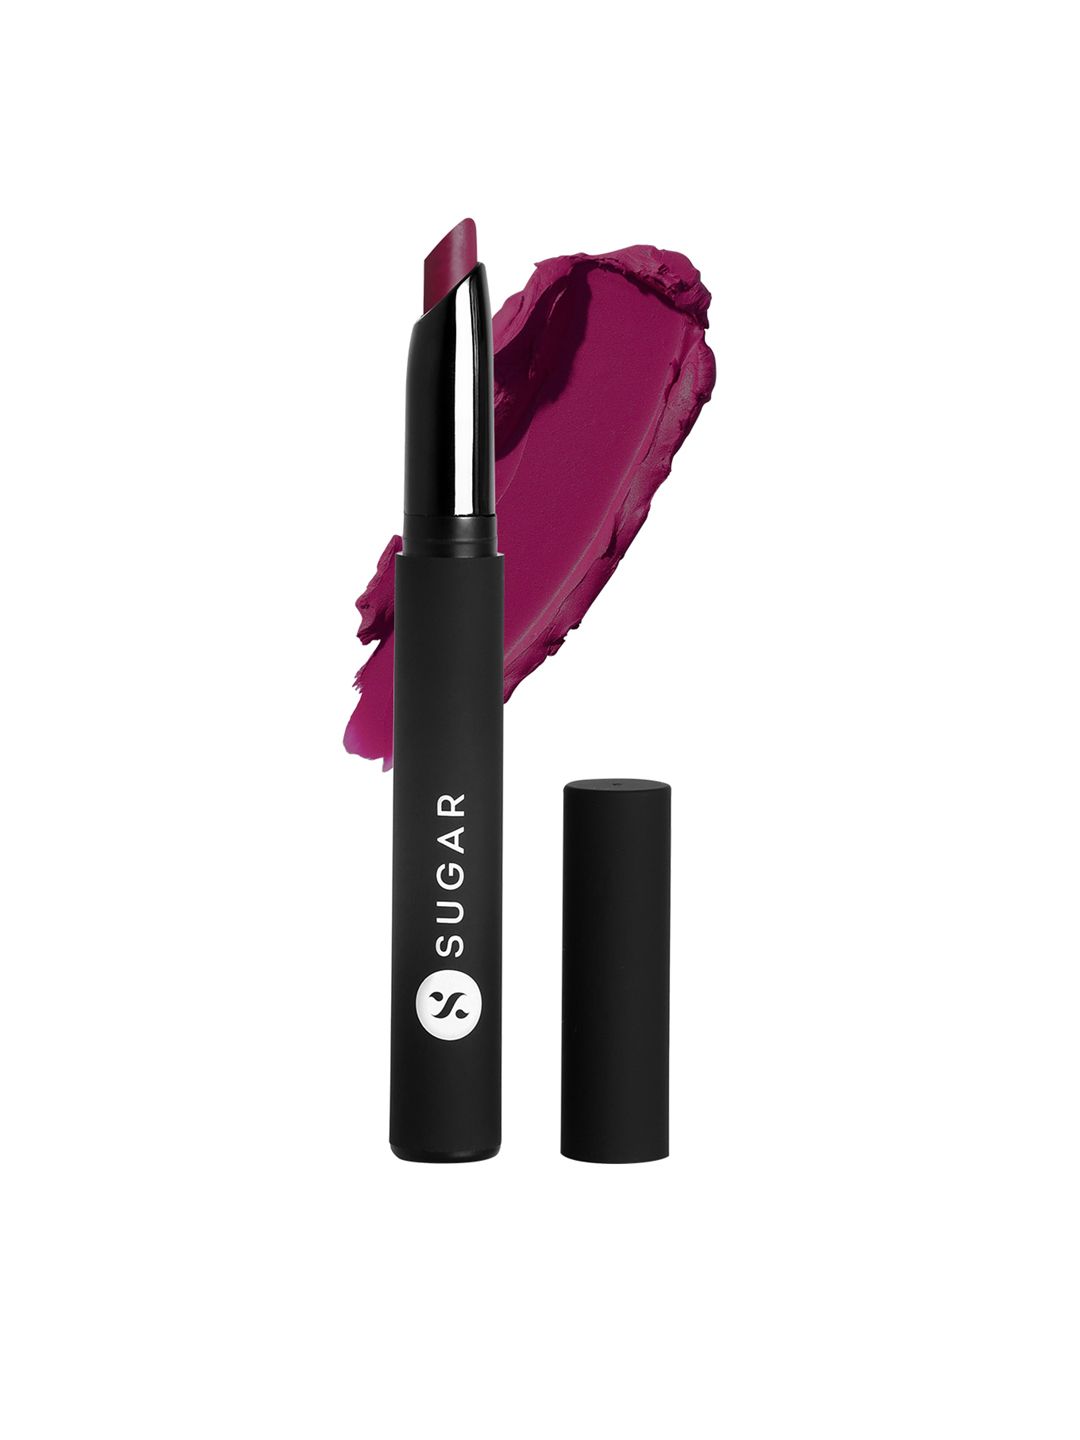 SUGAR Cosmetics Matte Attack Transferproof Lipstick - 08 Daft Pink (Deep Pink) Price in India